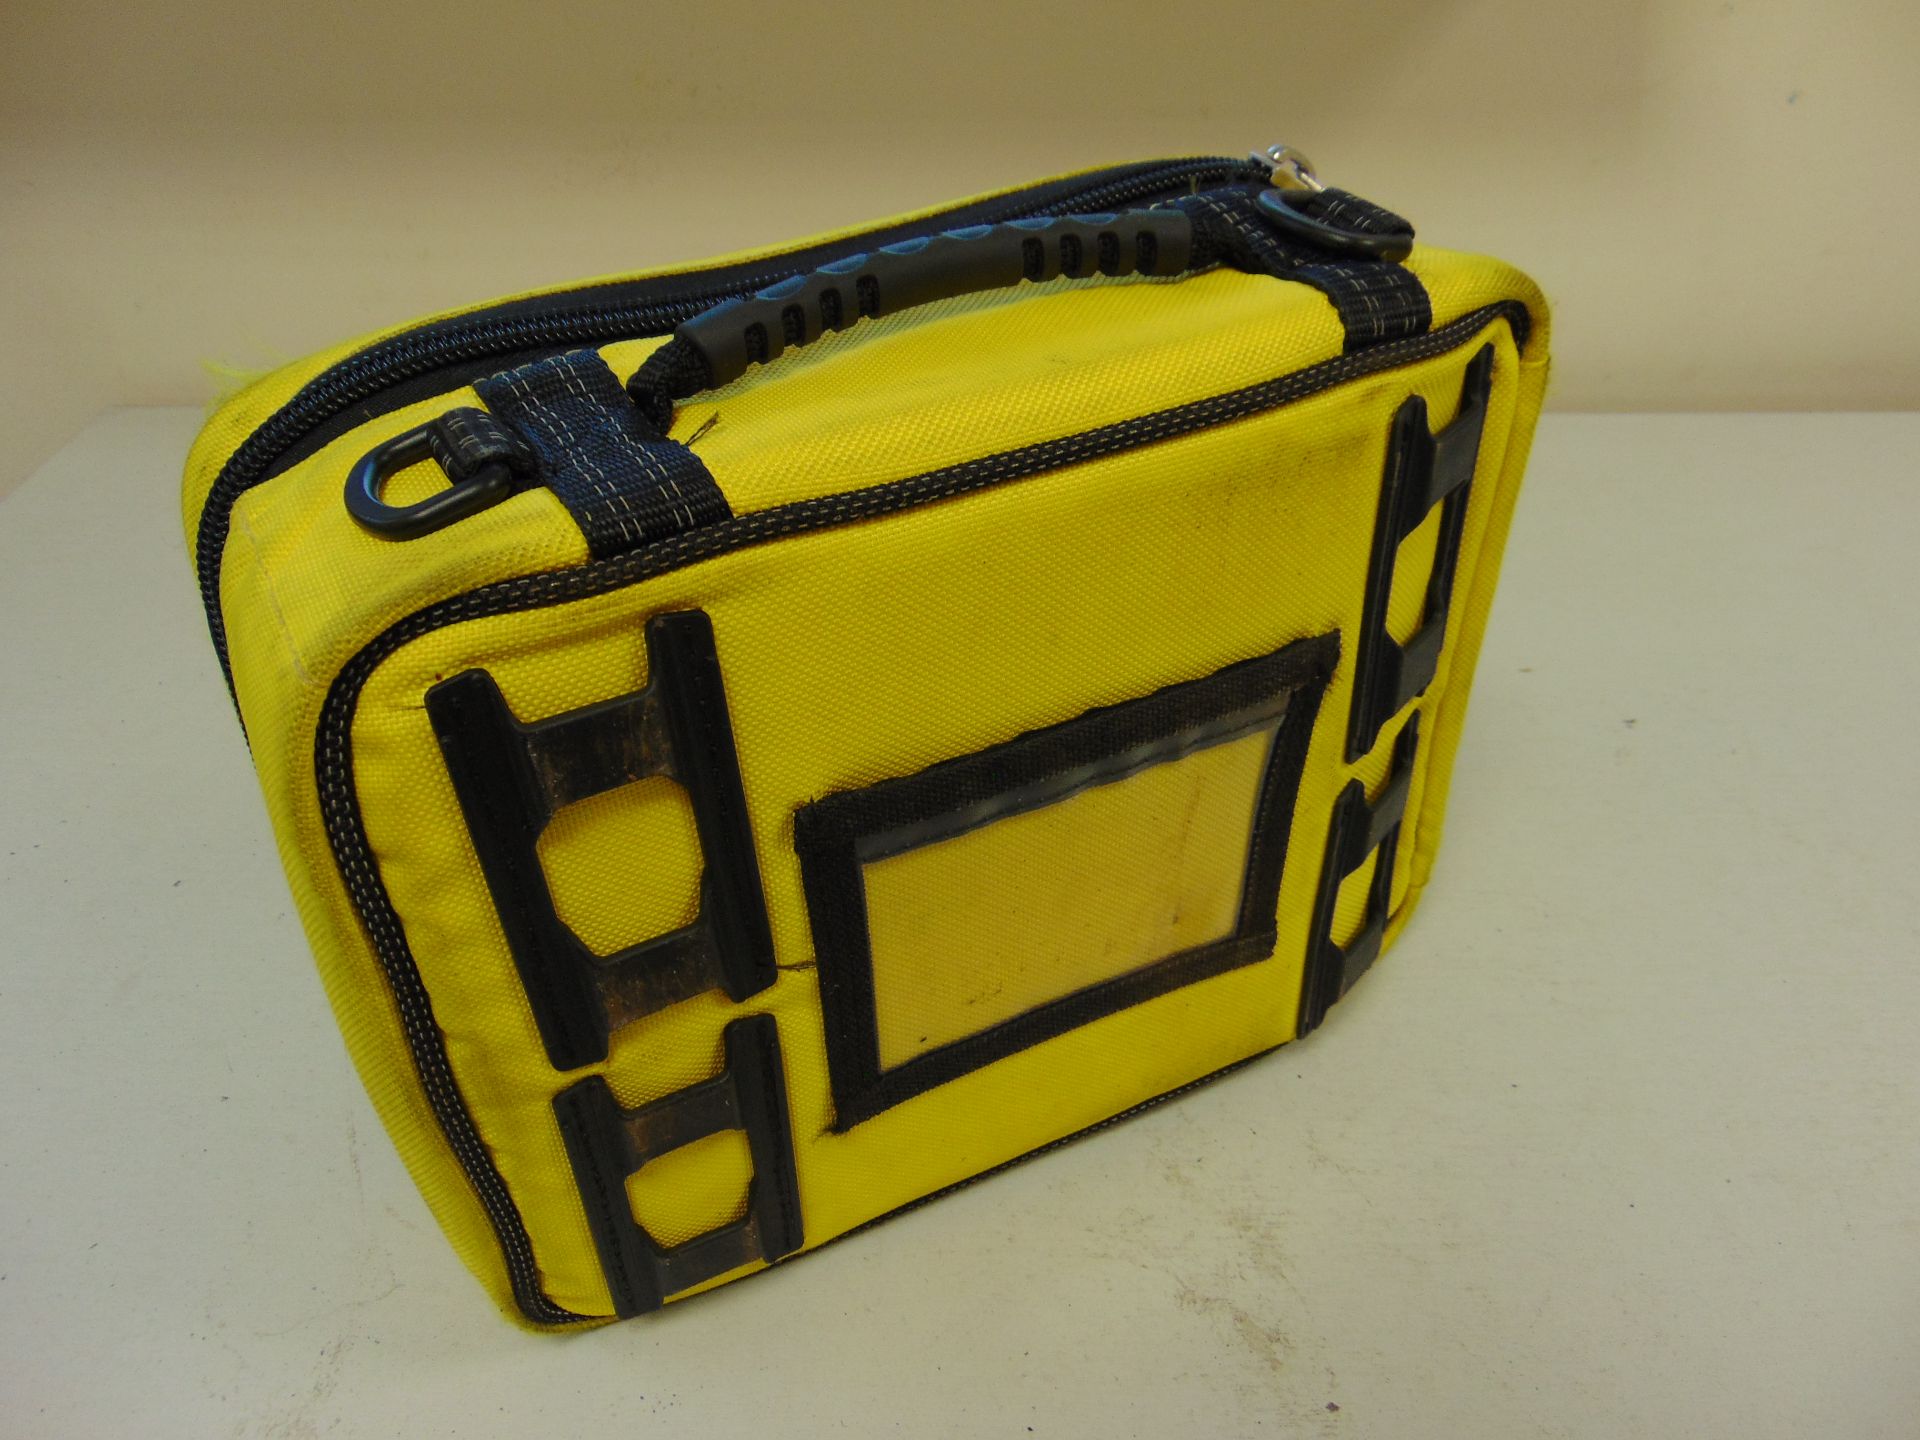 Heartstart FR2+ Semi-Automatic Defibrillator Unit in Carry Case - Image 5 of 5